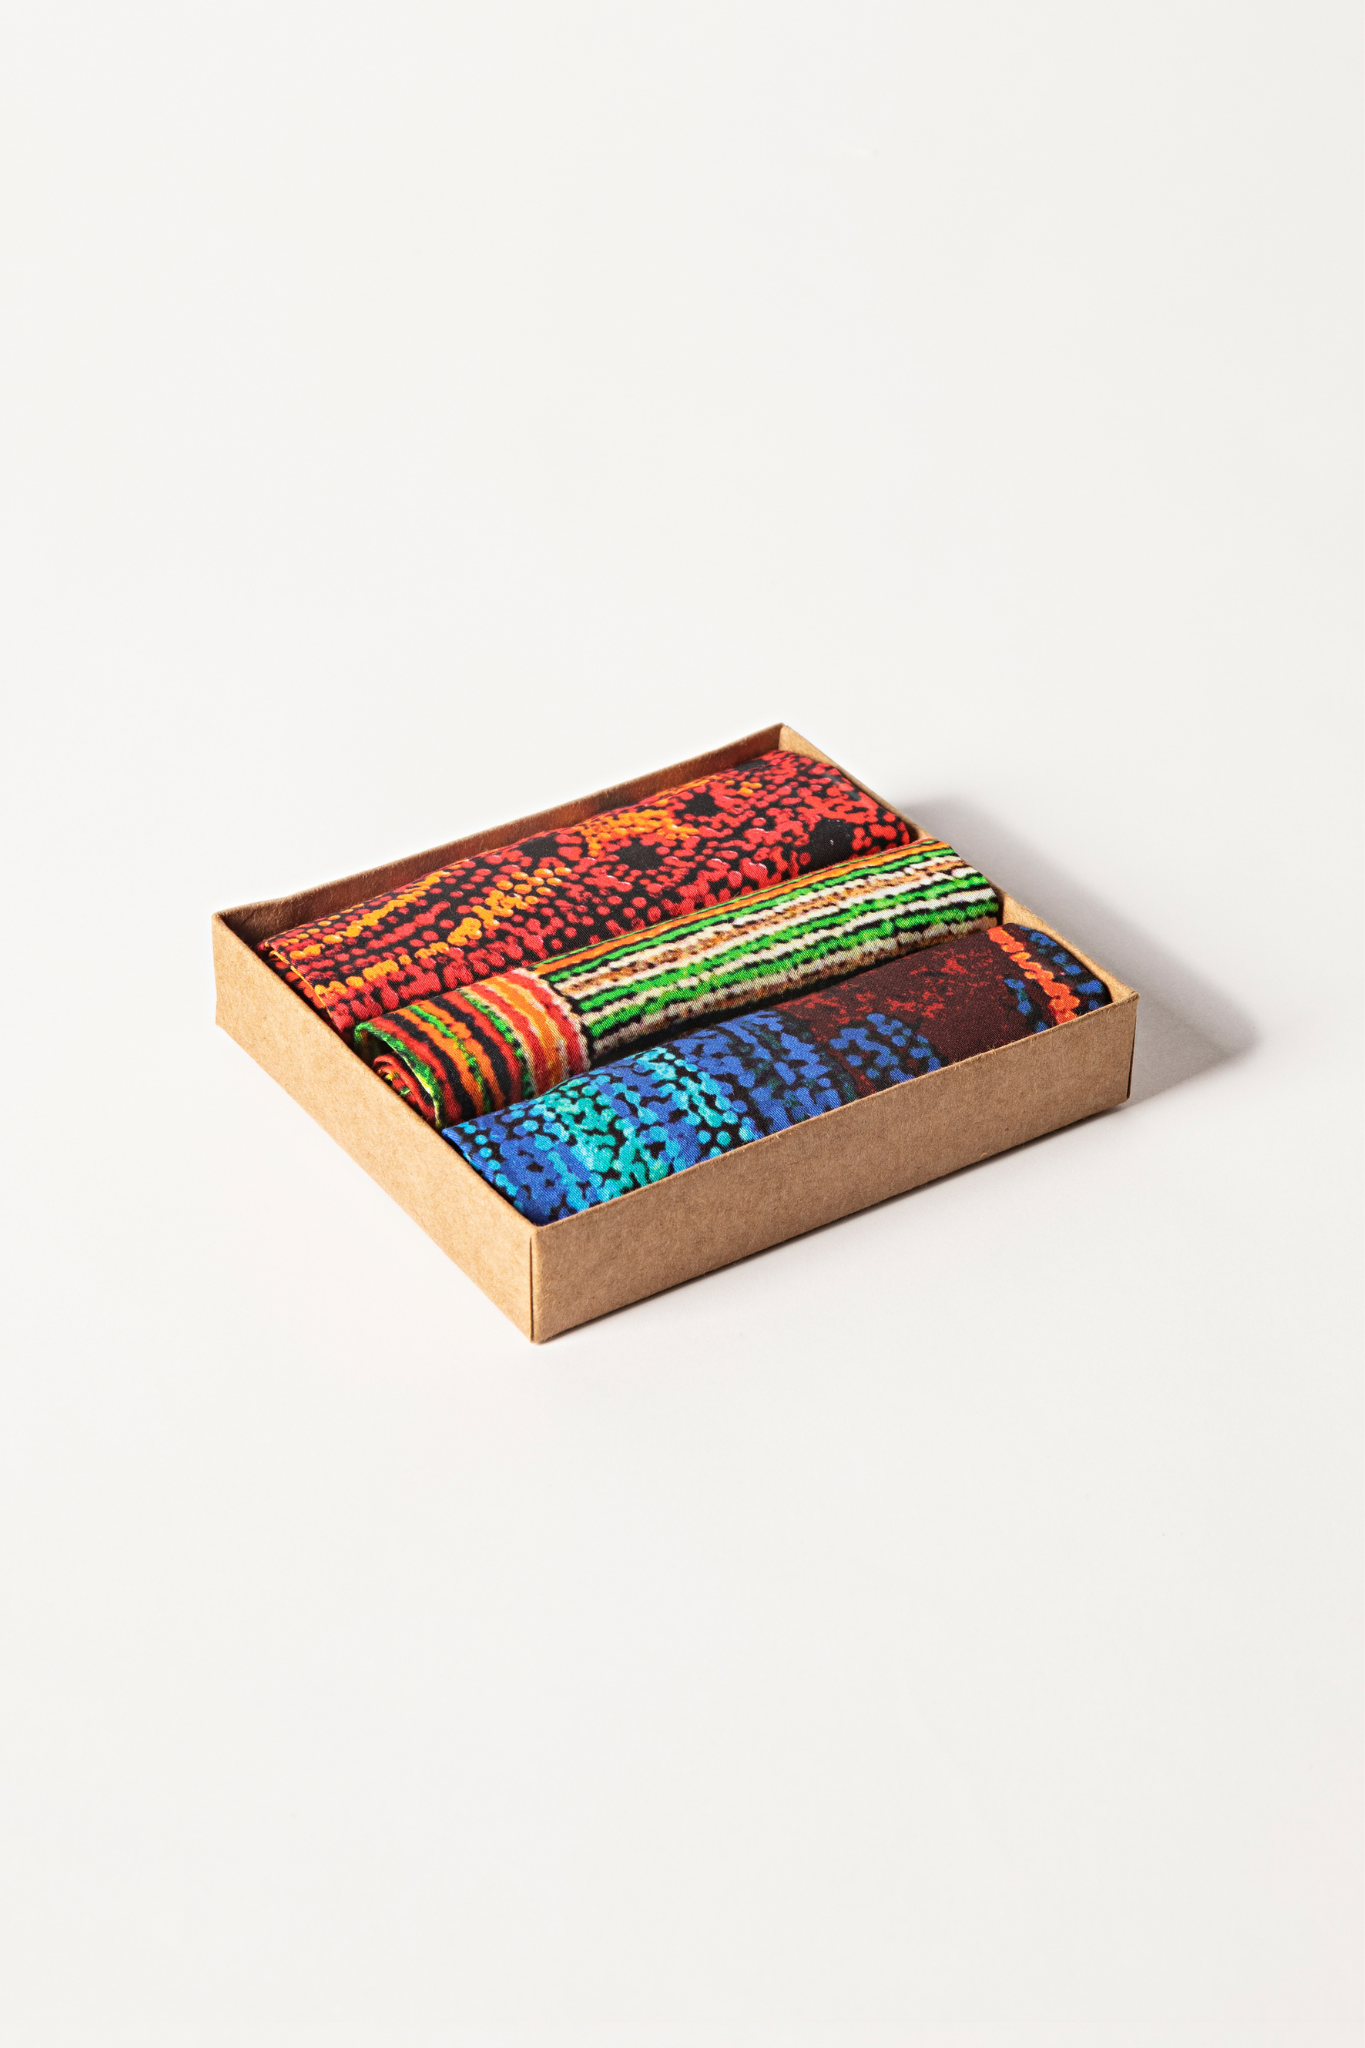 Boxed Set of 3 Handkerchiefs - Julie Woods